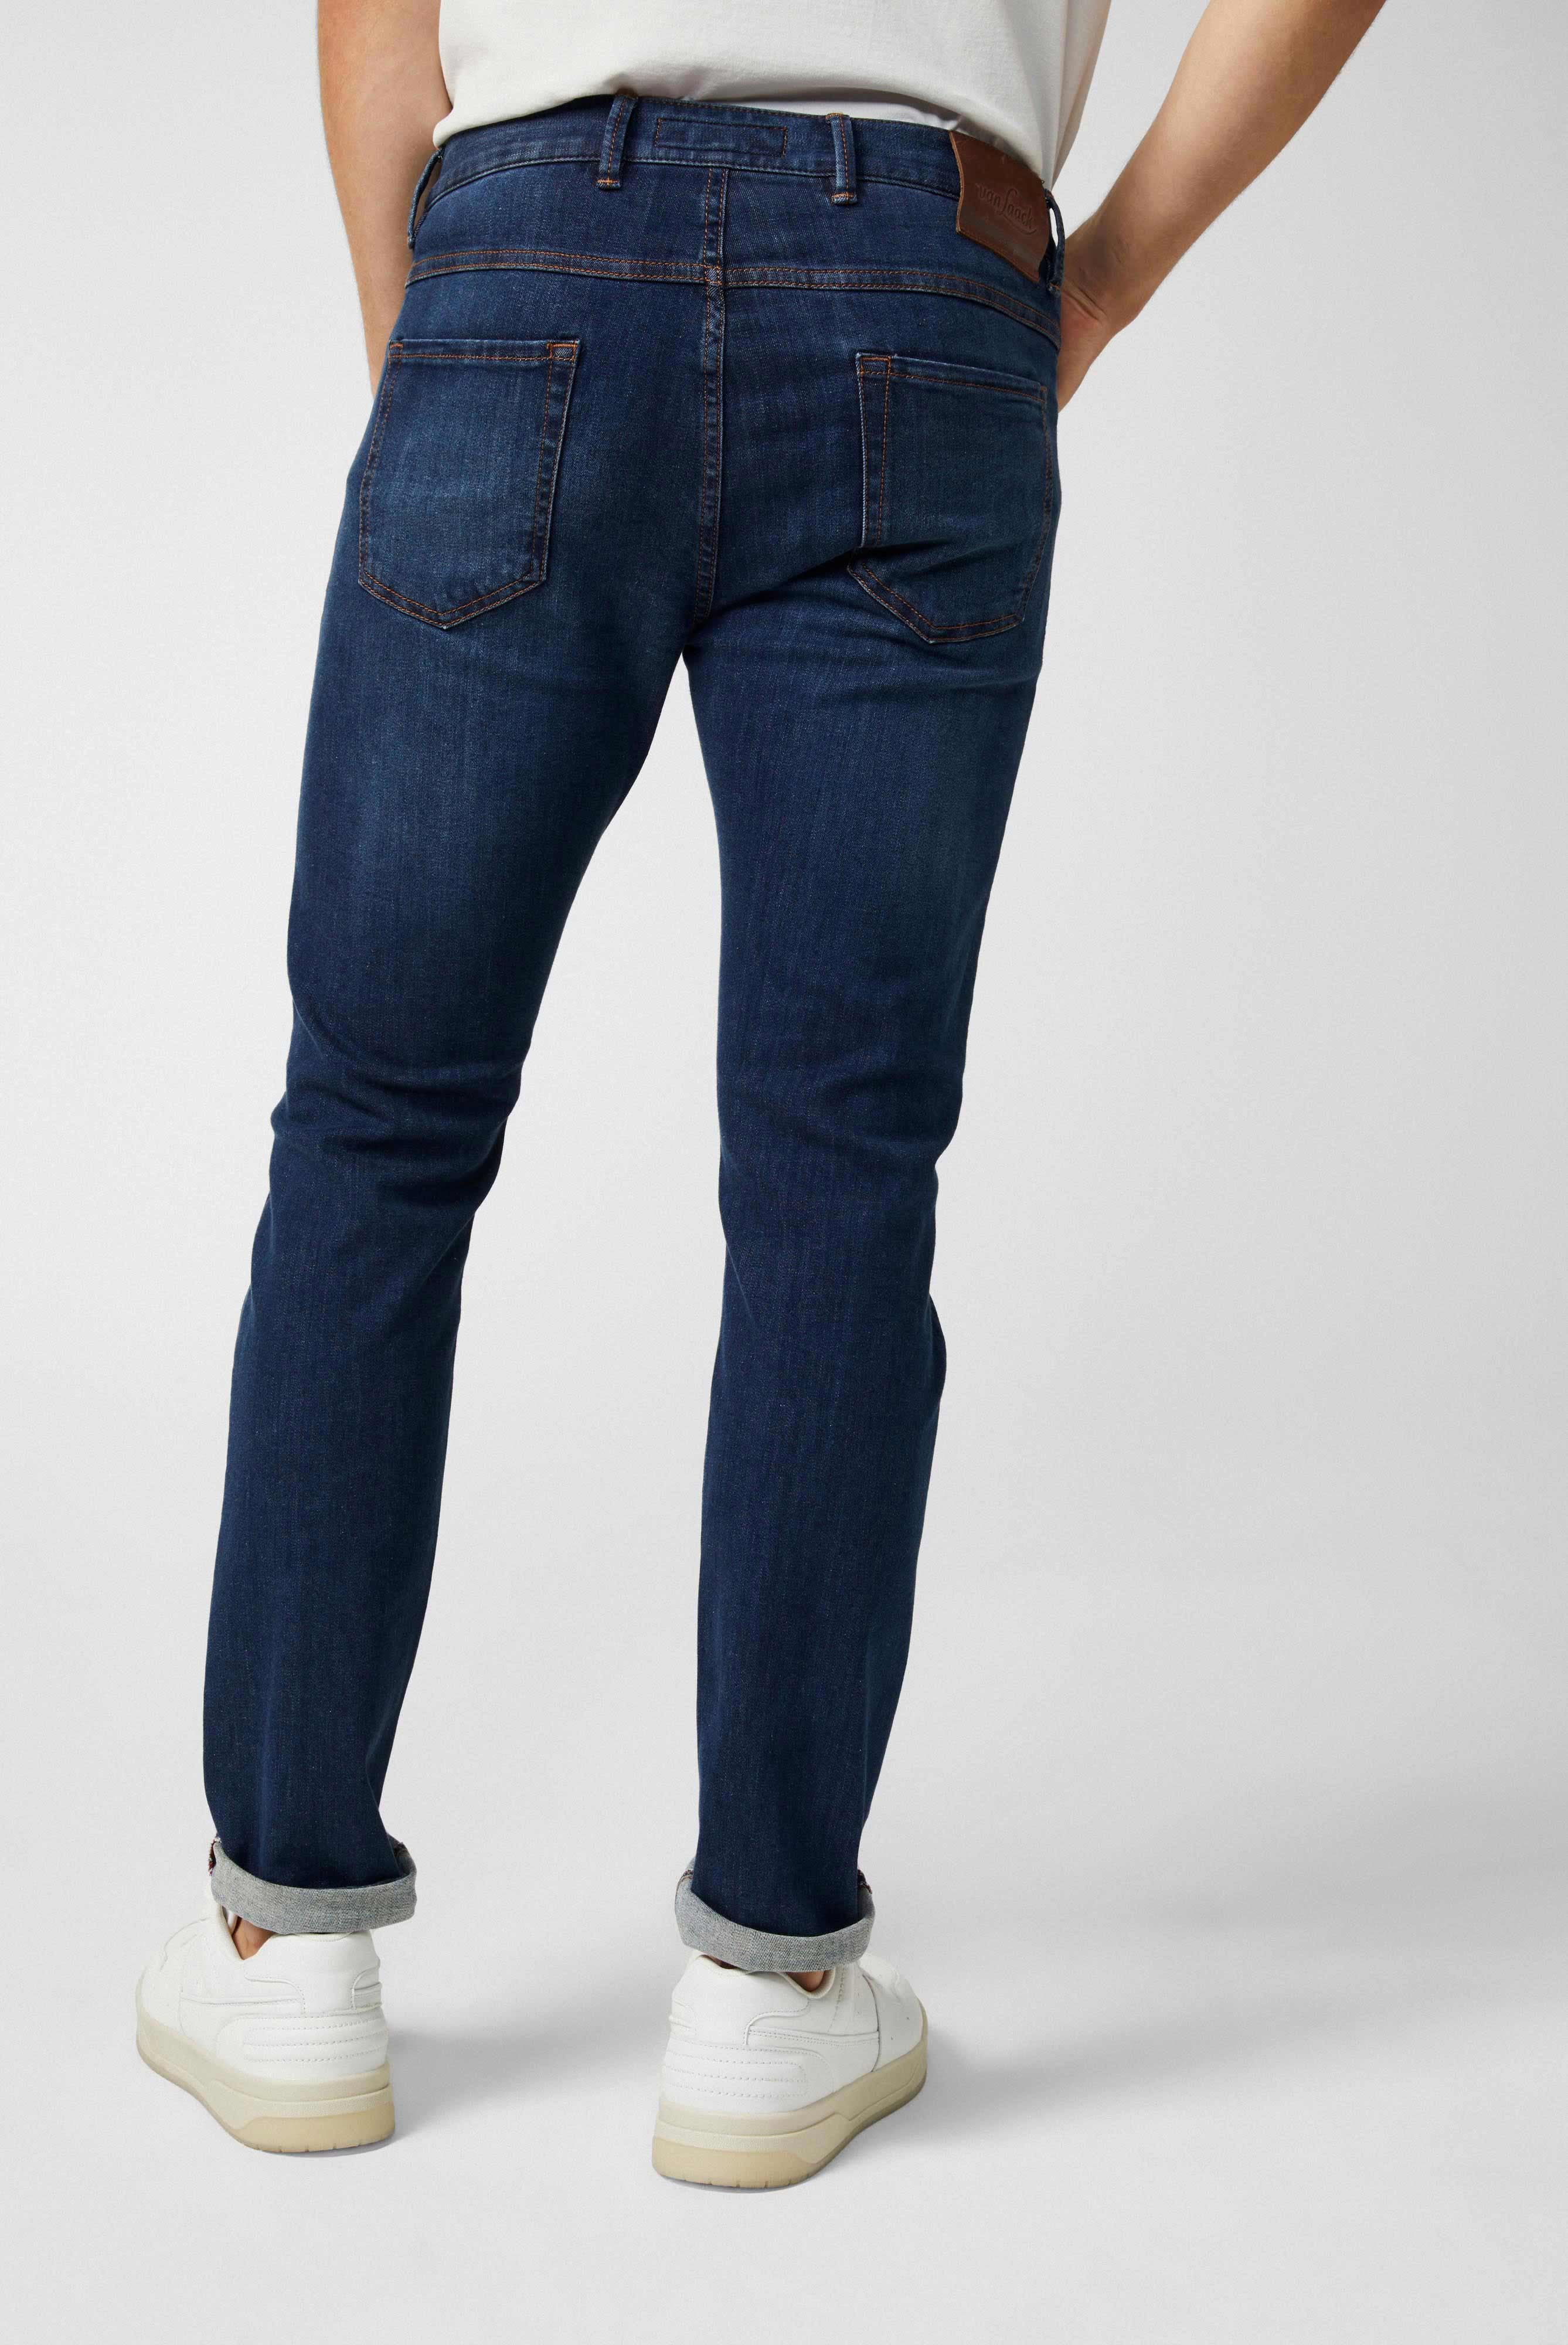 Jeans & Hosen+Jeanshose mit Streth Slim Fit+80.7857..J00117.780.32N